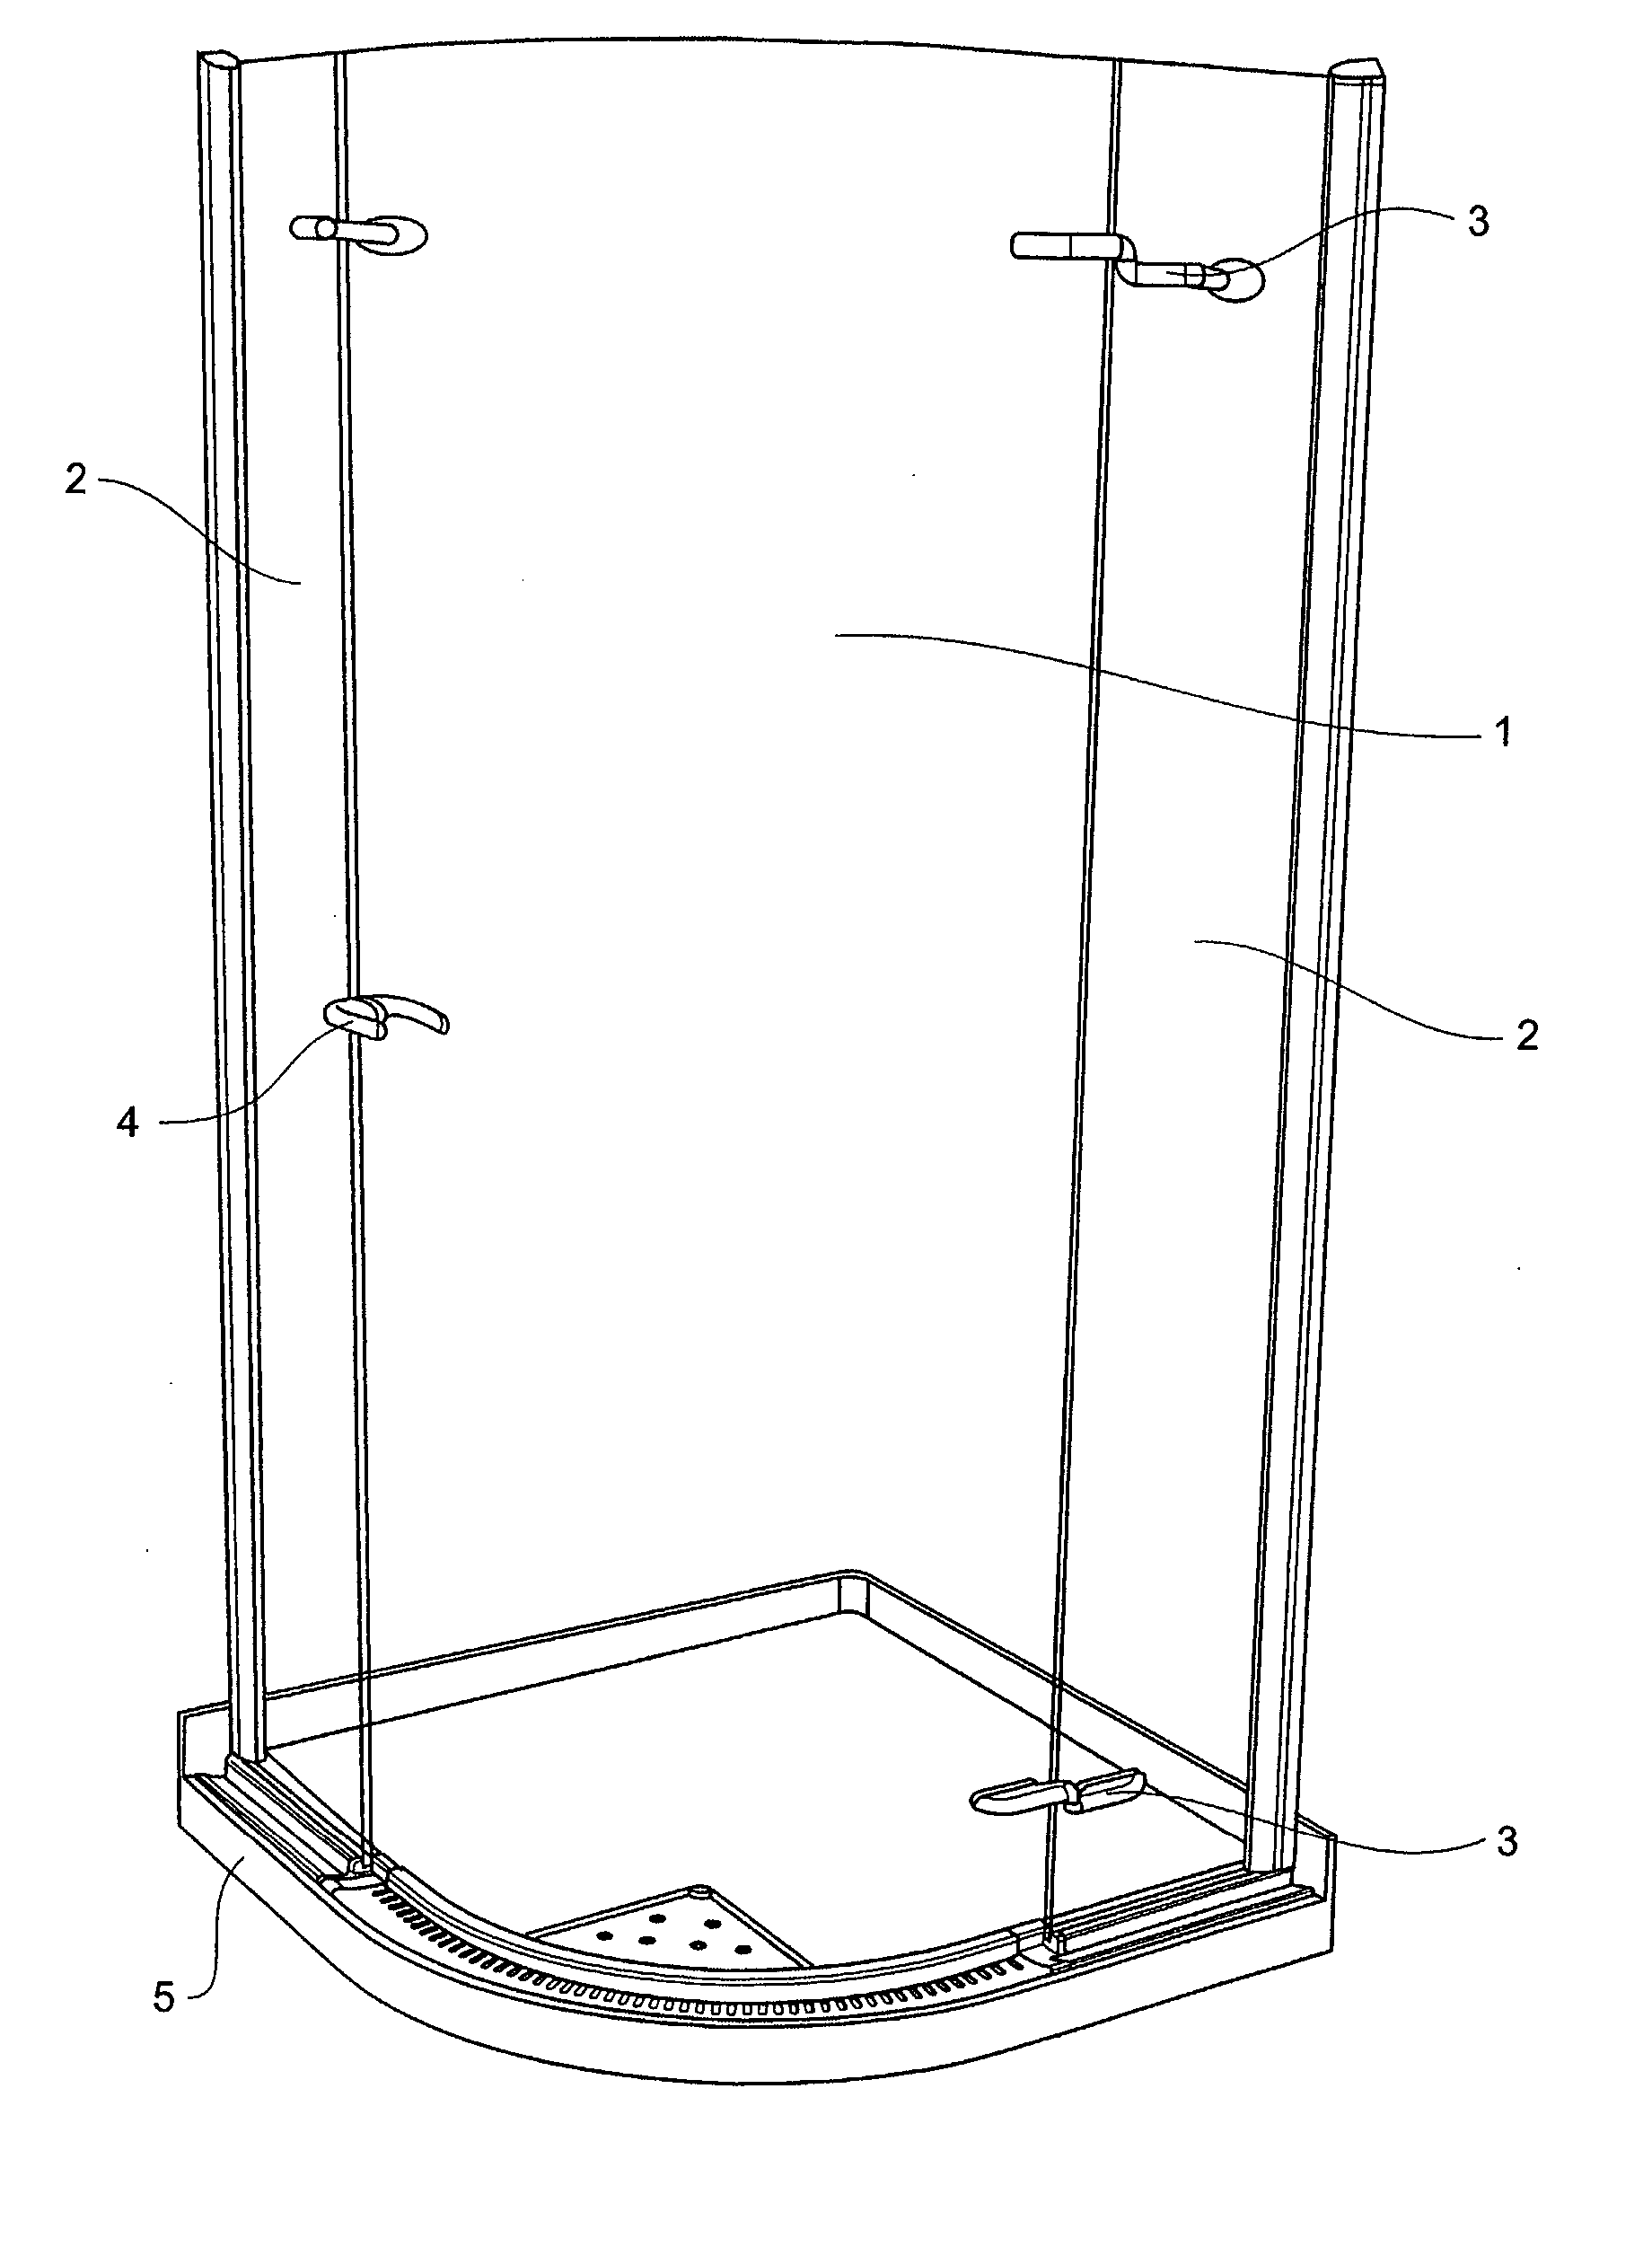 Shower enclosure and base